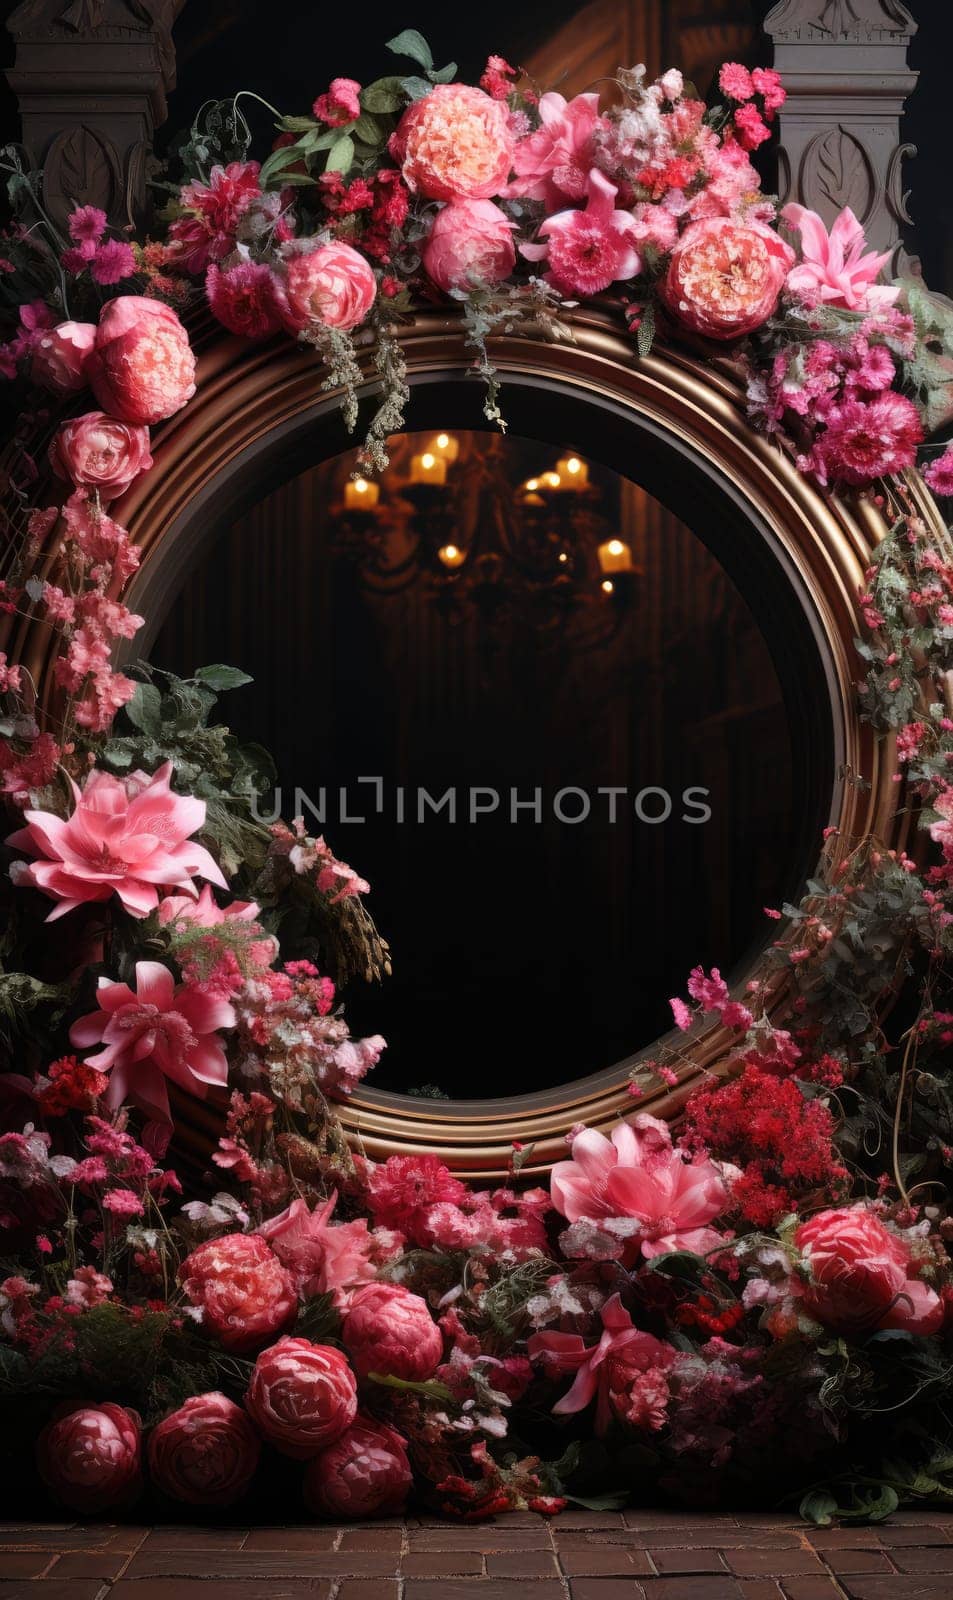 floral hoop digital backdrops. shoot set up with prop Flower and wood backdrop.